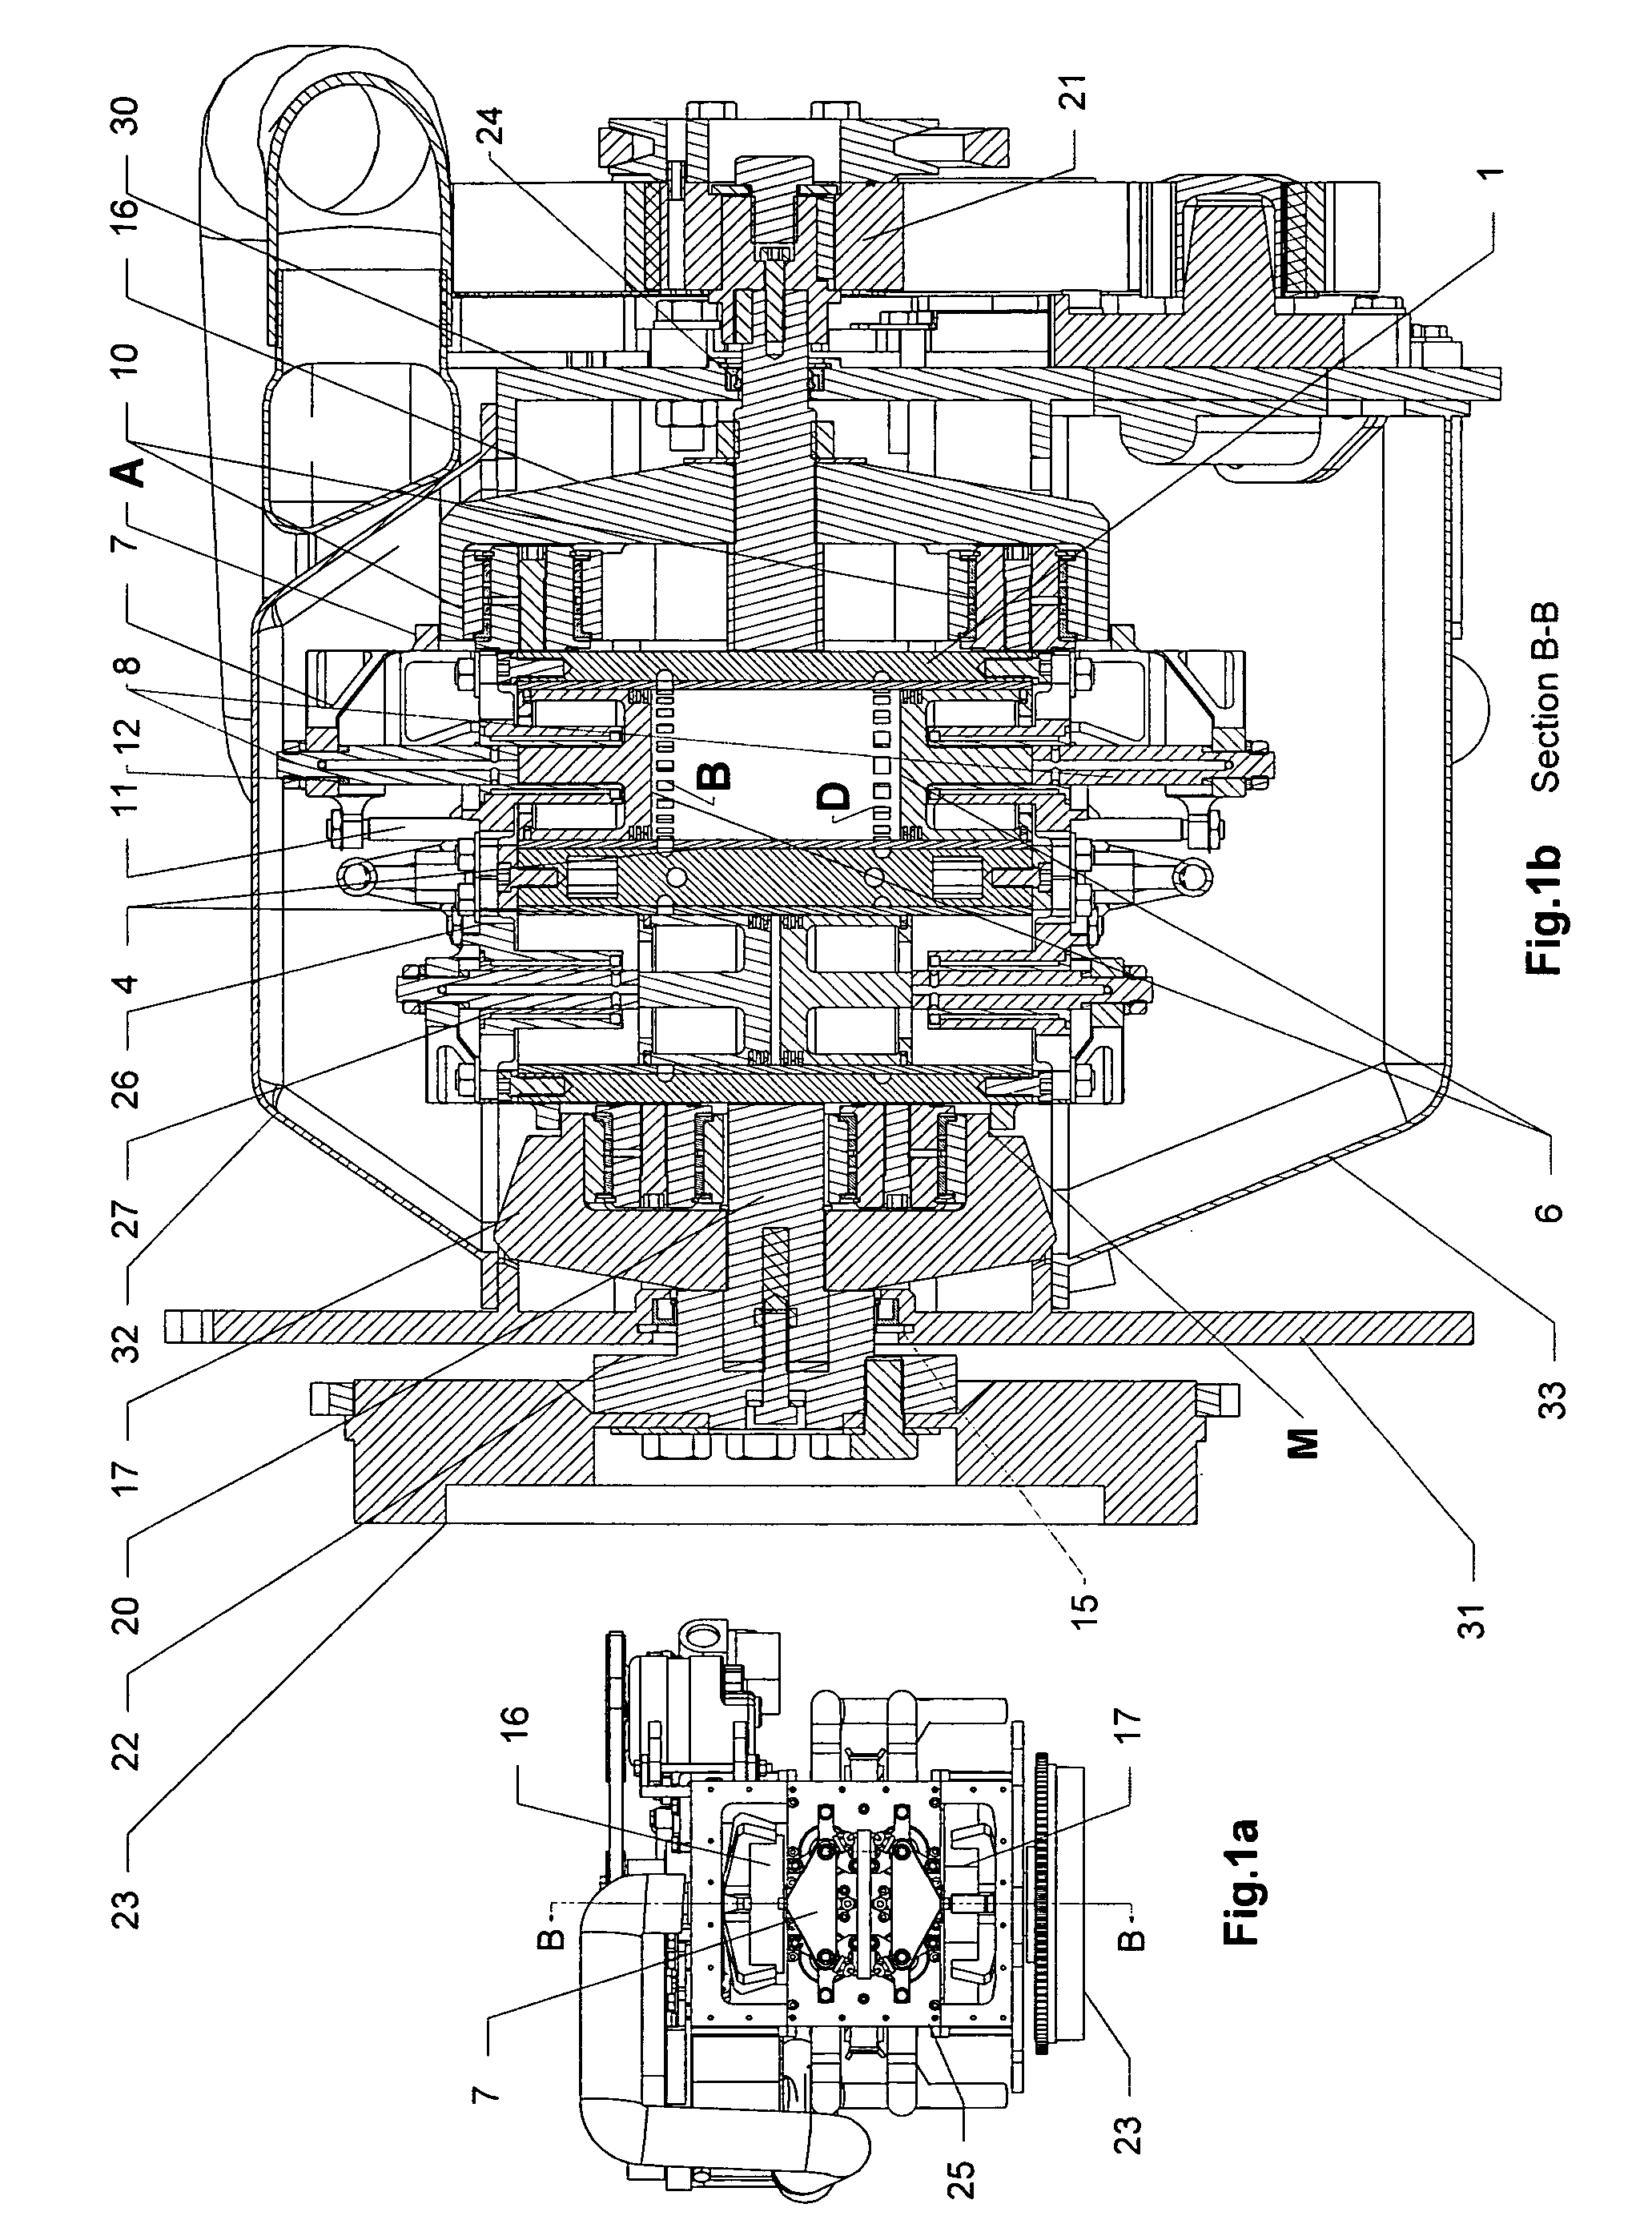 Opposite radial rotary-piston engine of Choronski